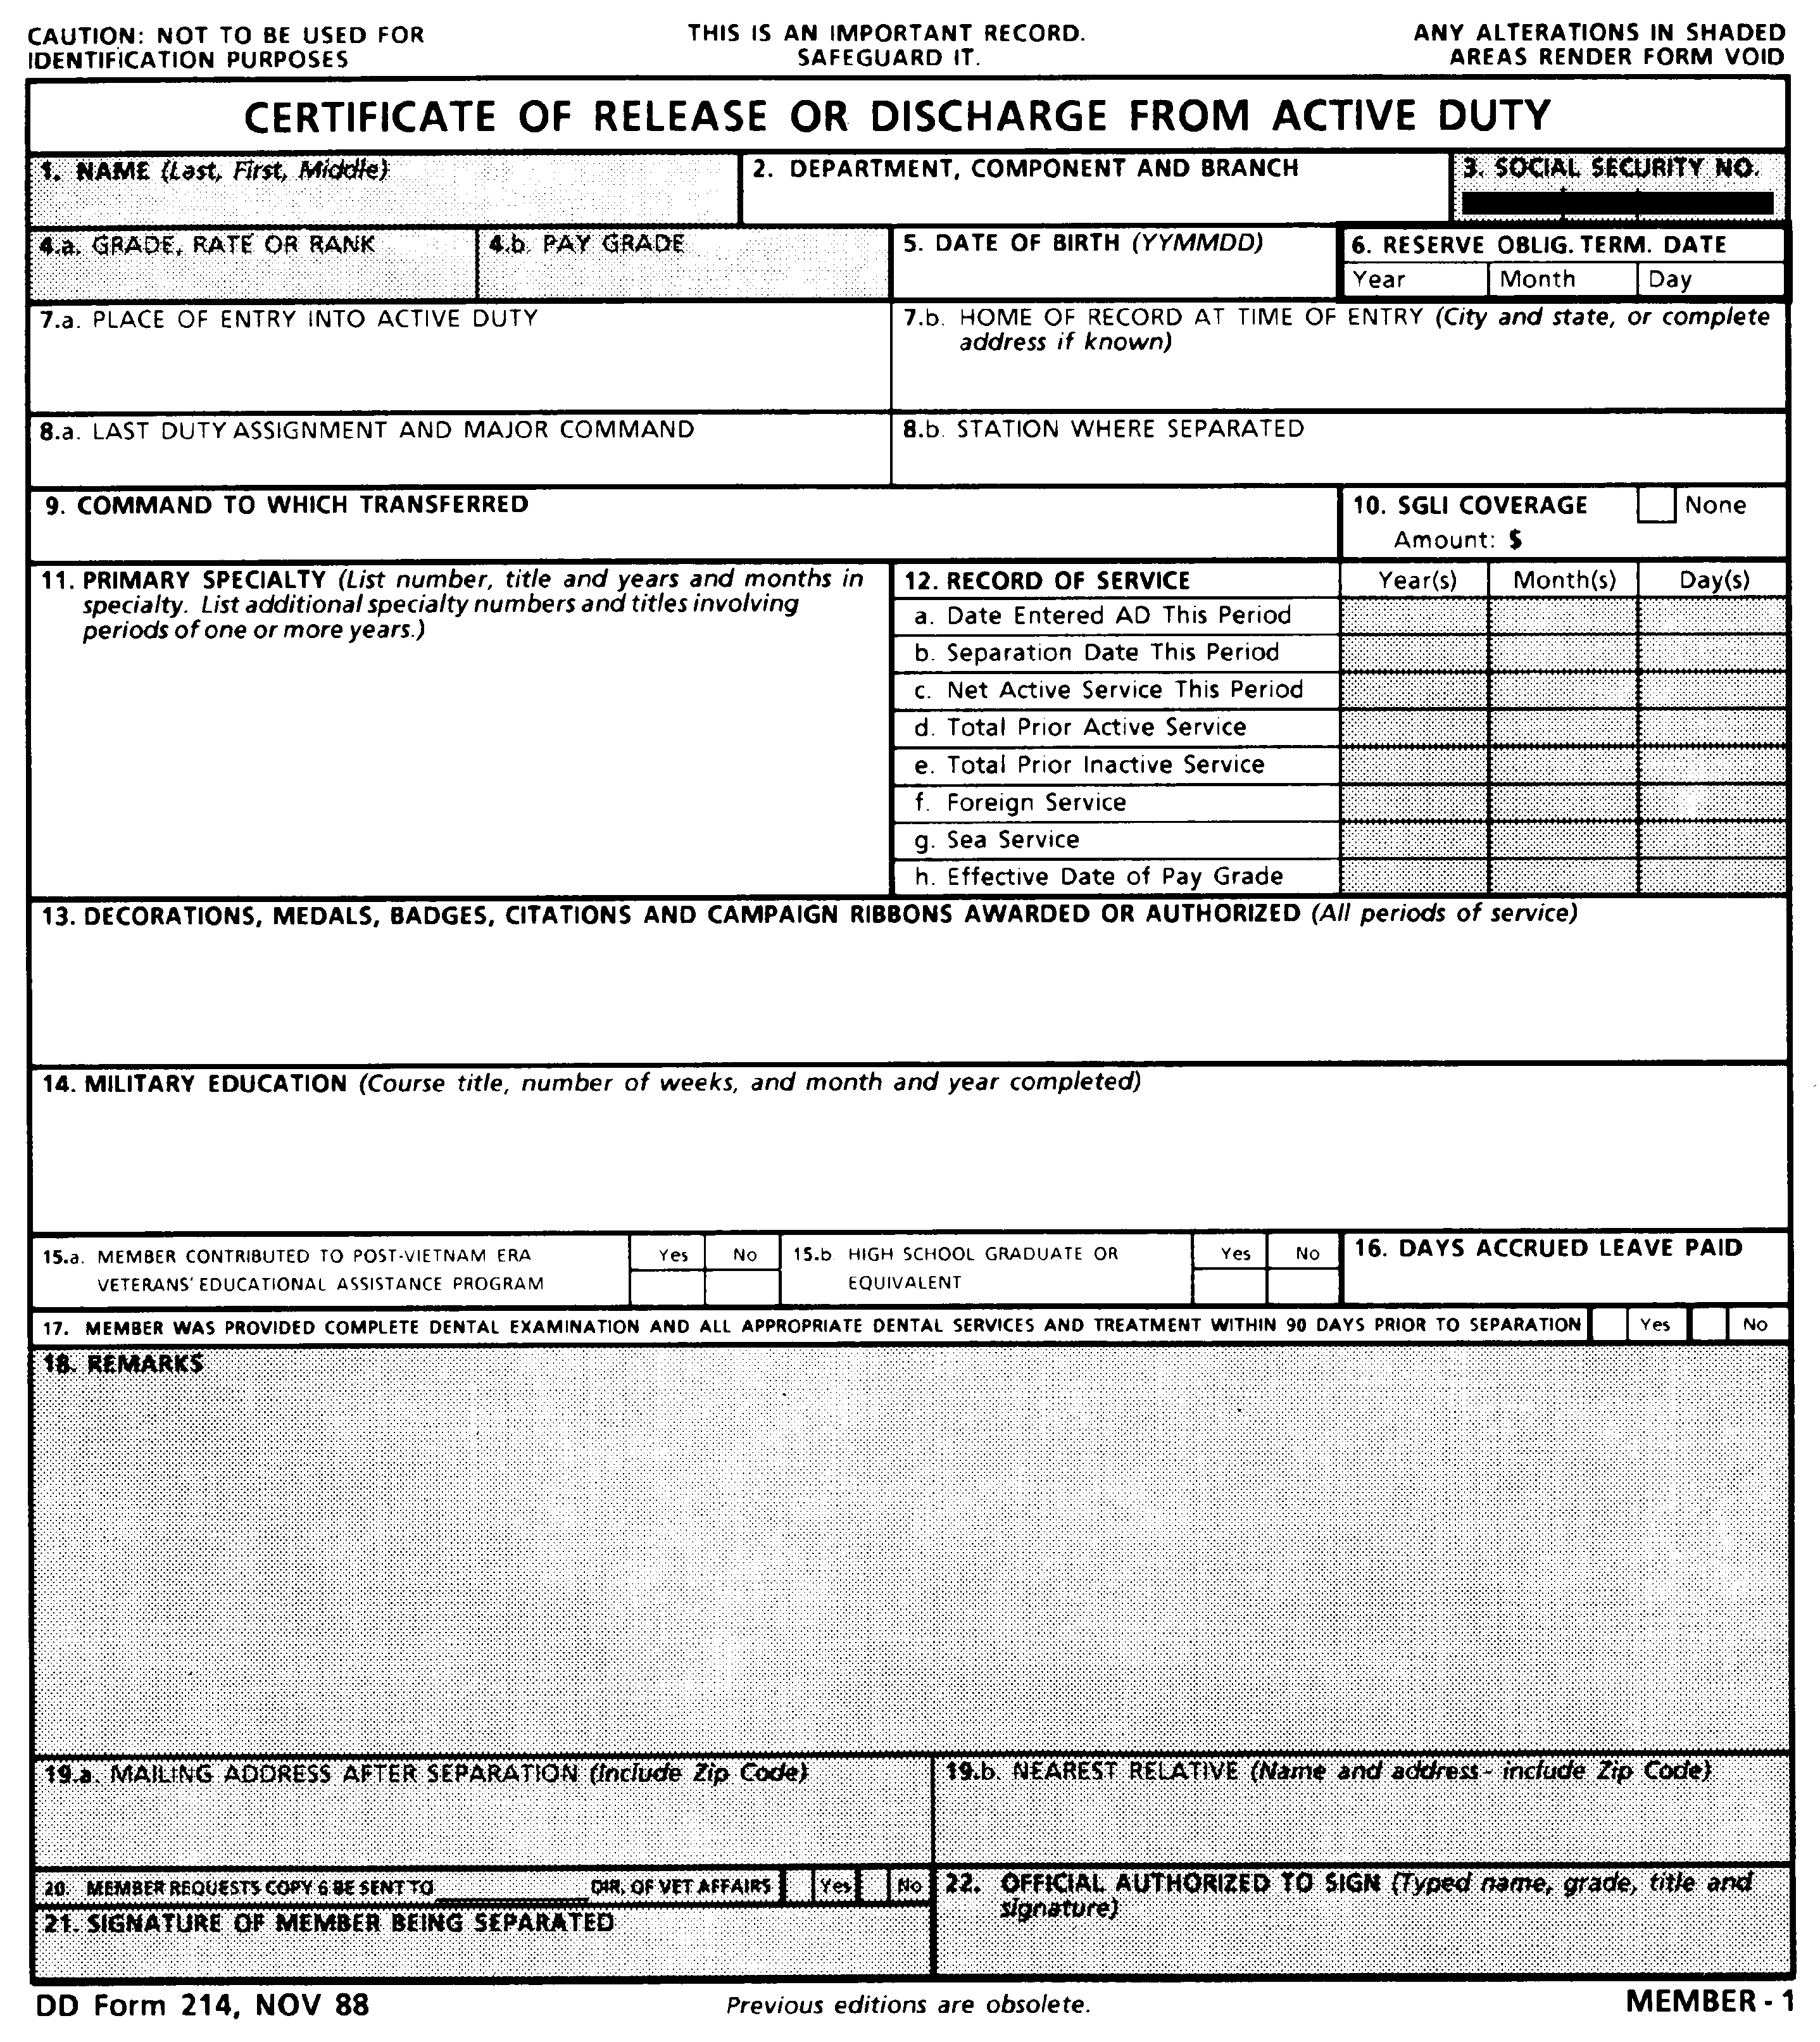 DD-214 Example Form